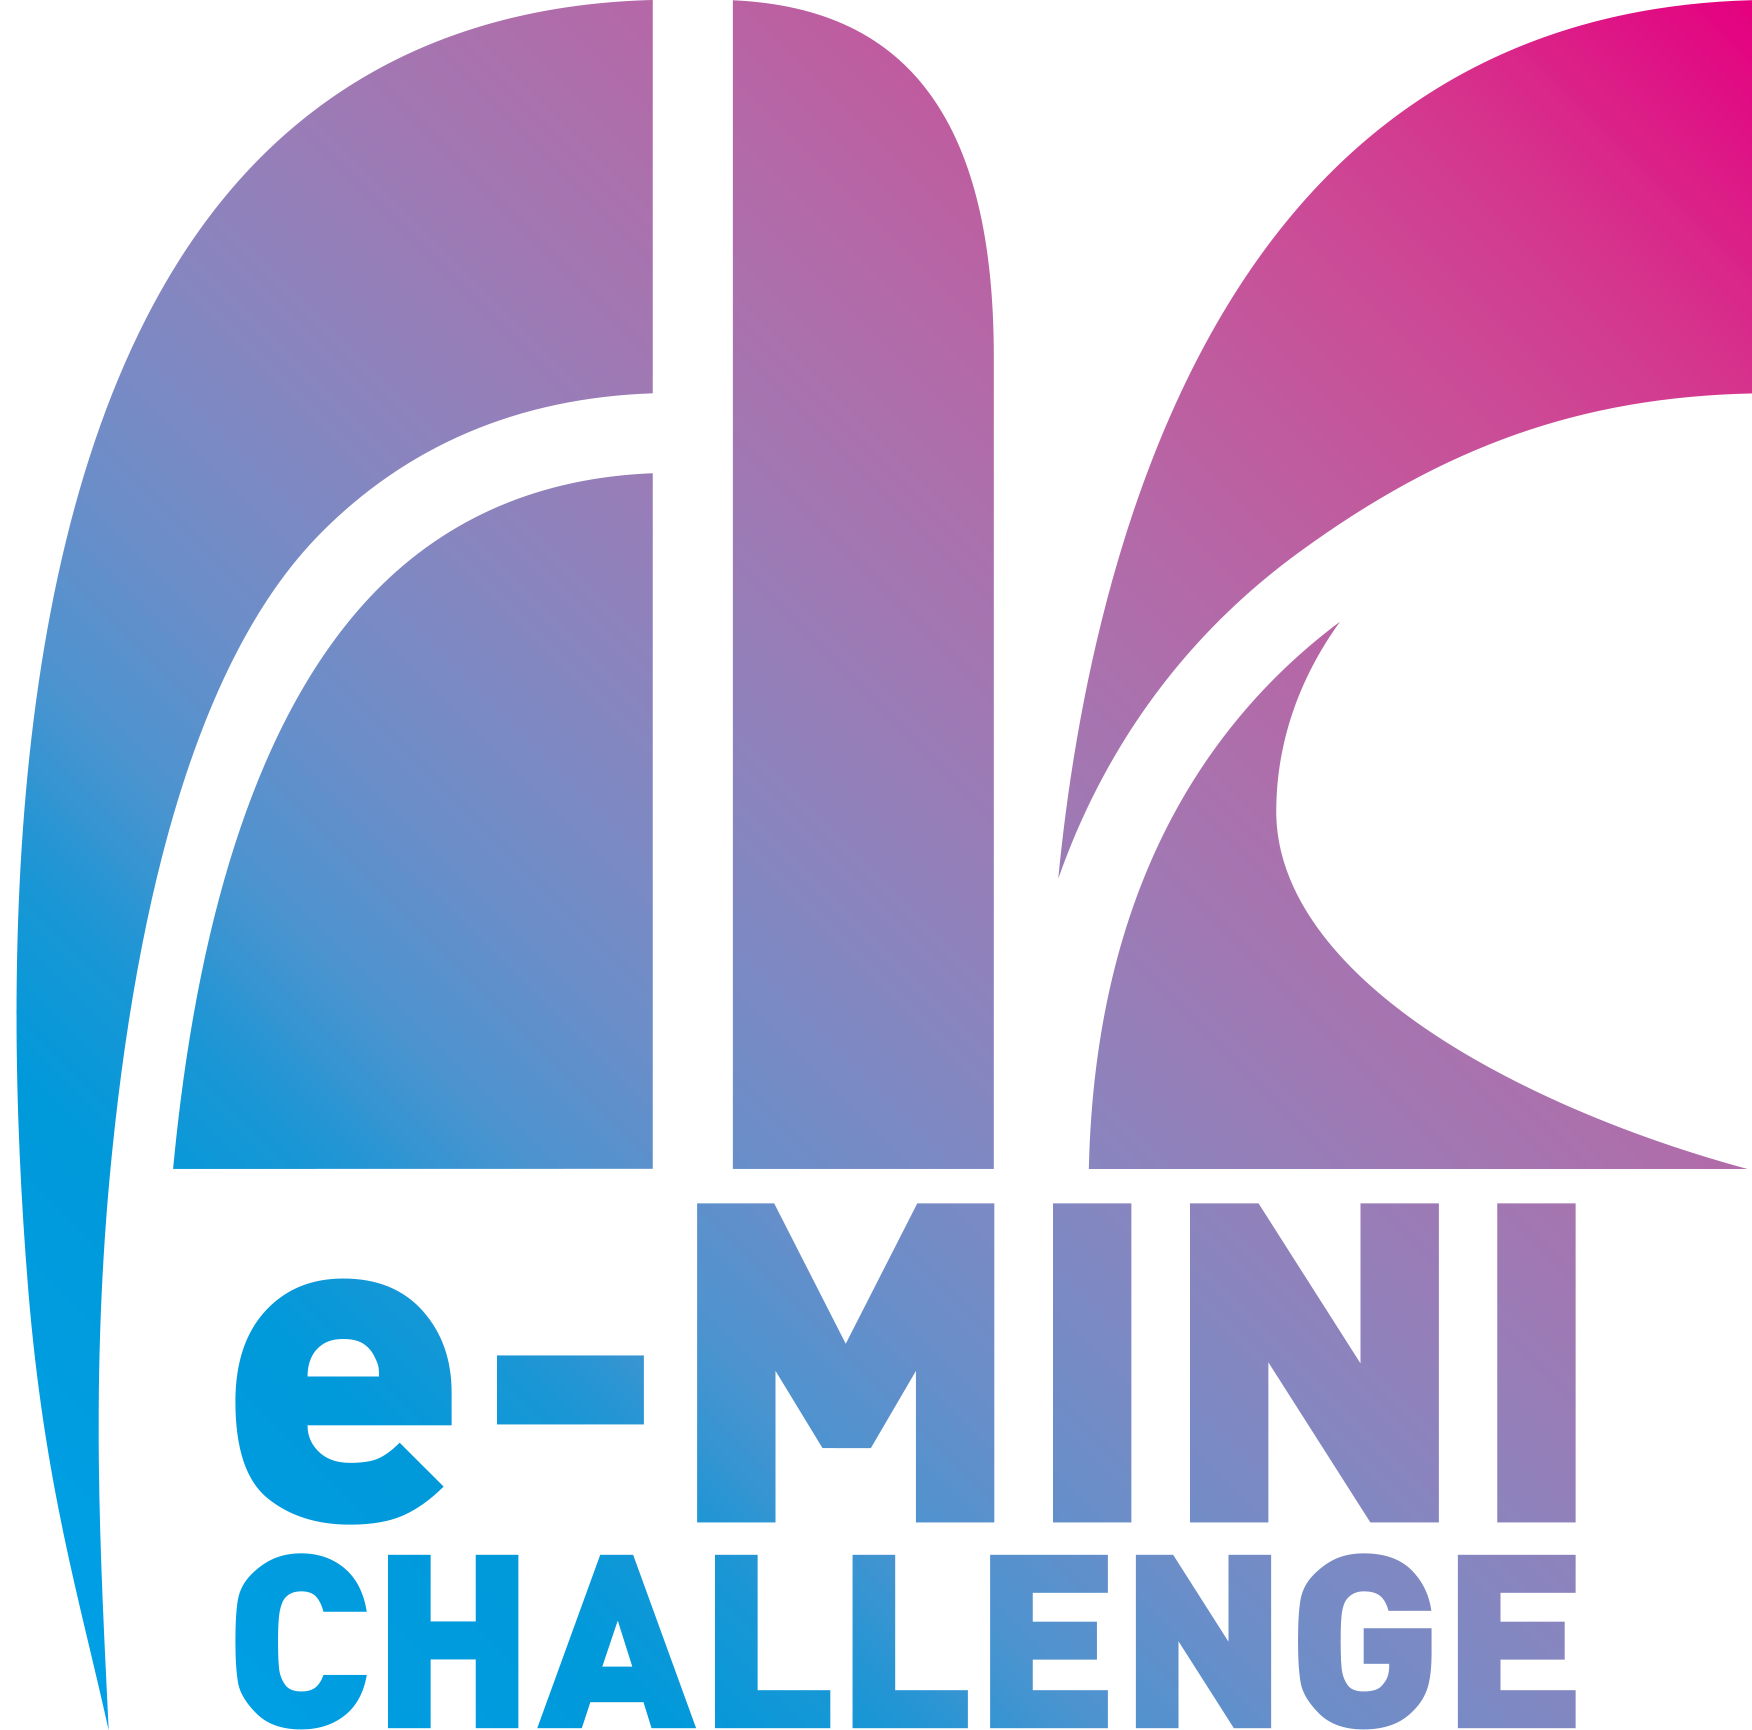 e-MINI CHALLENGE® 2022 S1 Rd.1 A/B ポイントランキング公開